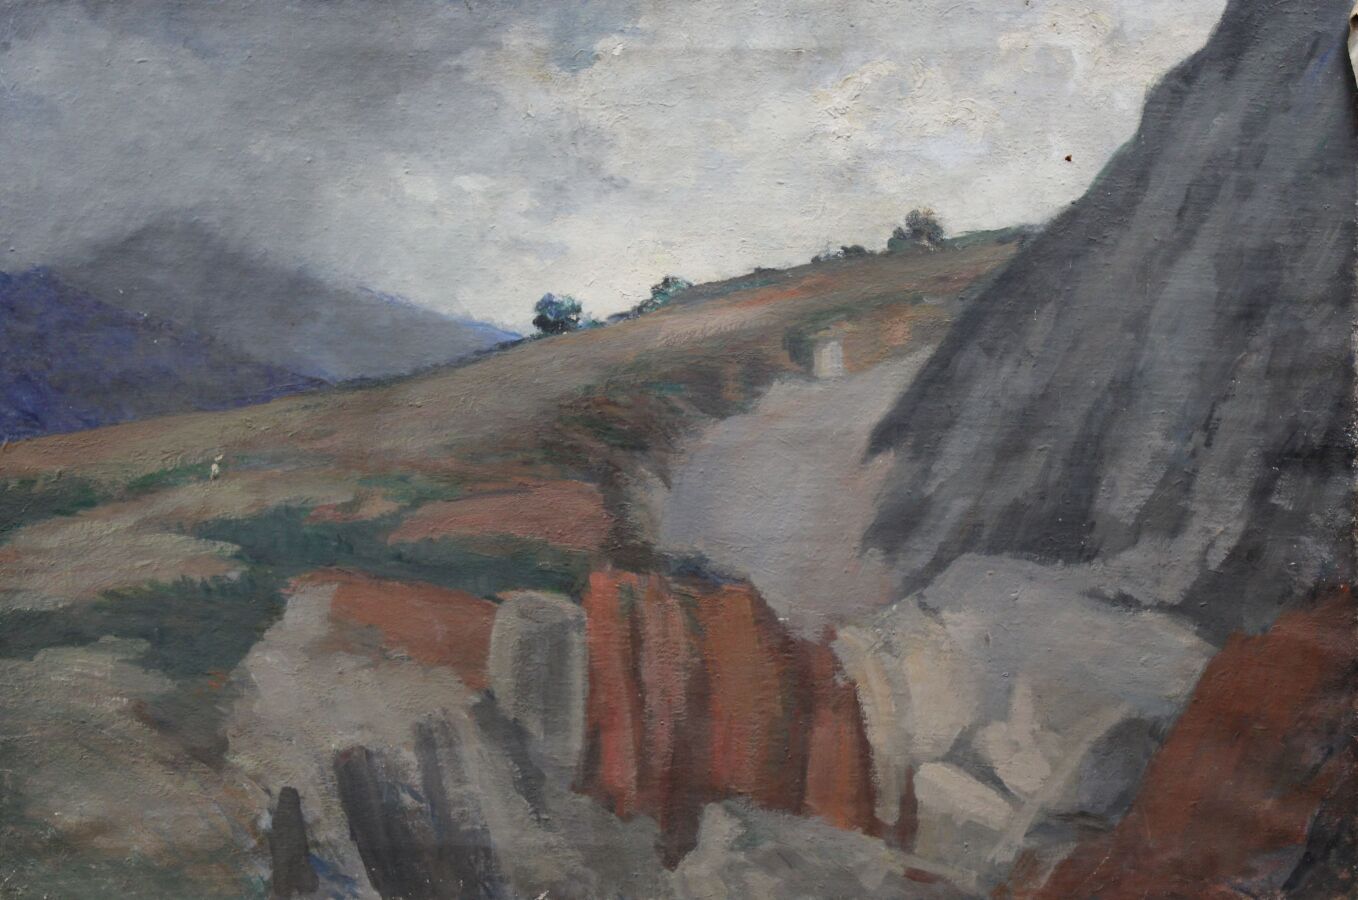 Null 二十世纪初的法国画派："有灰色天空的山区风景"。布面油画。磨损和撕裂。54 x 80厘米